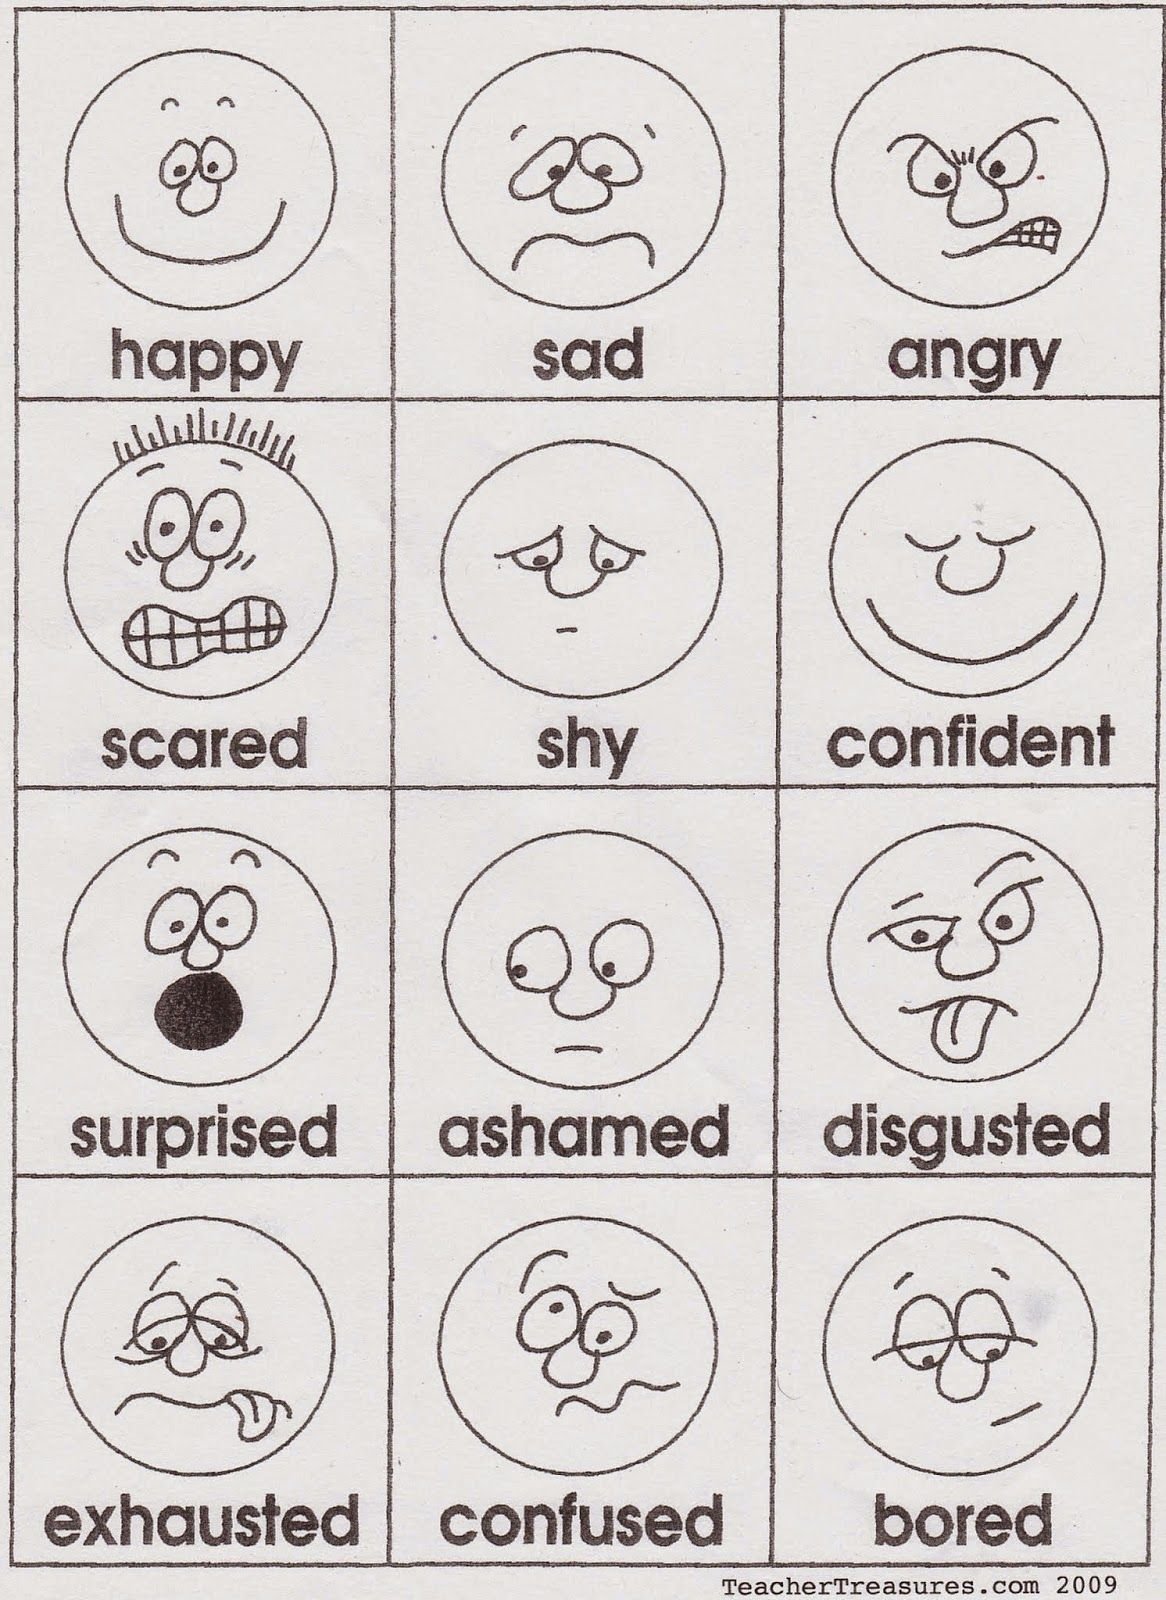 Feelings tasks. Эмоции на английском для дошкольников. Feelings задания для детей. Карточки эмоции на английском для детей. Эмоции для дошкольников.